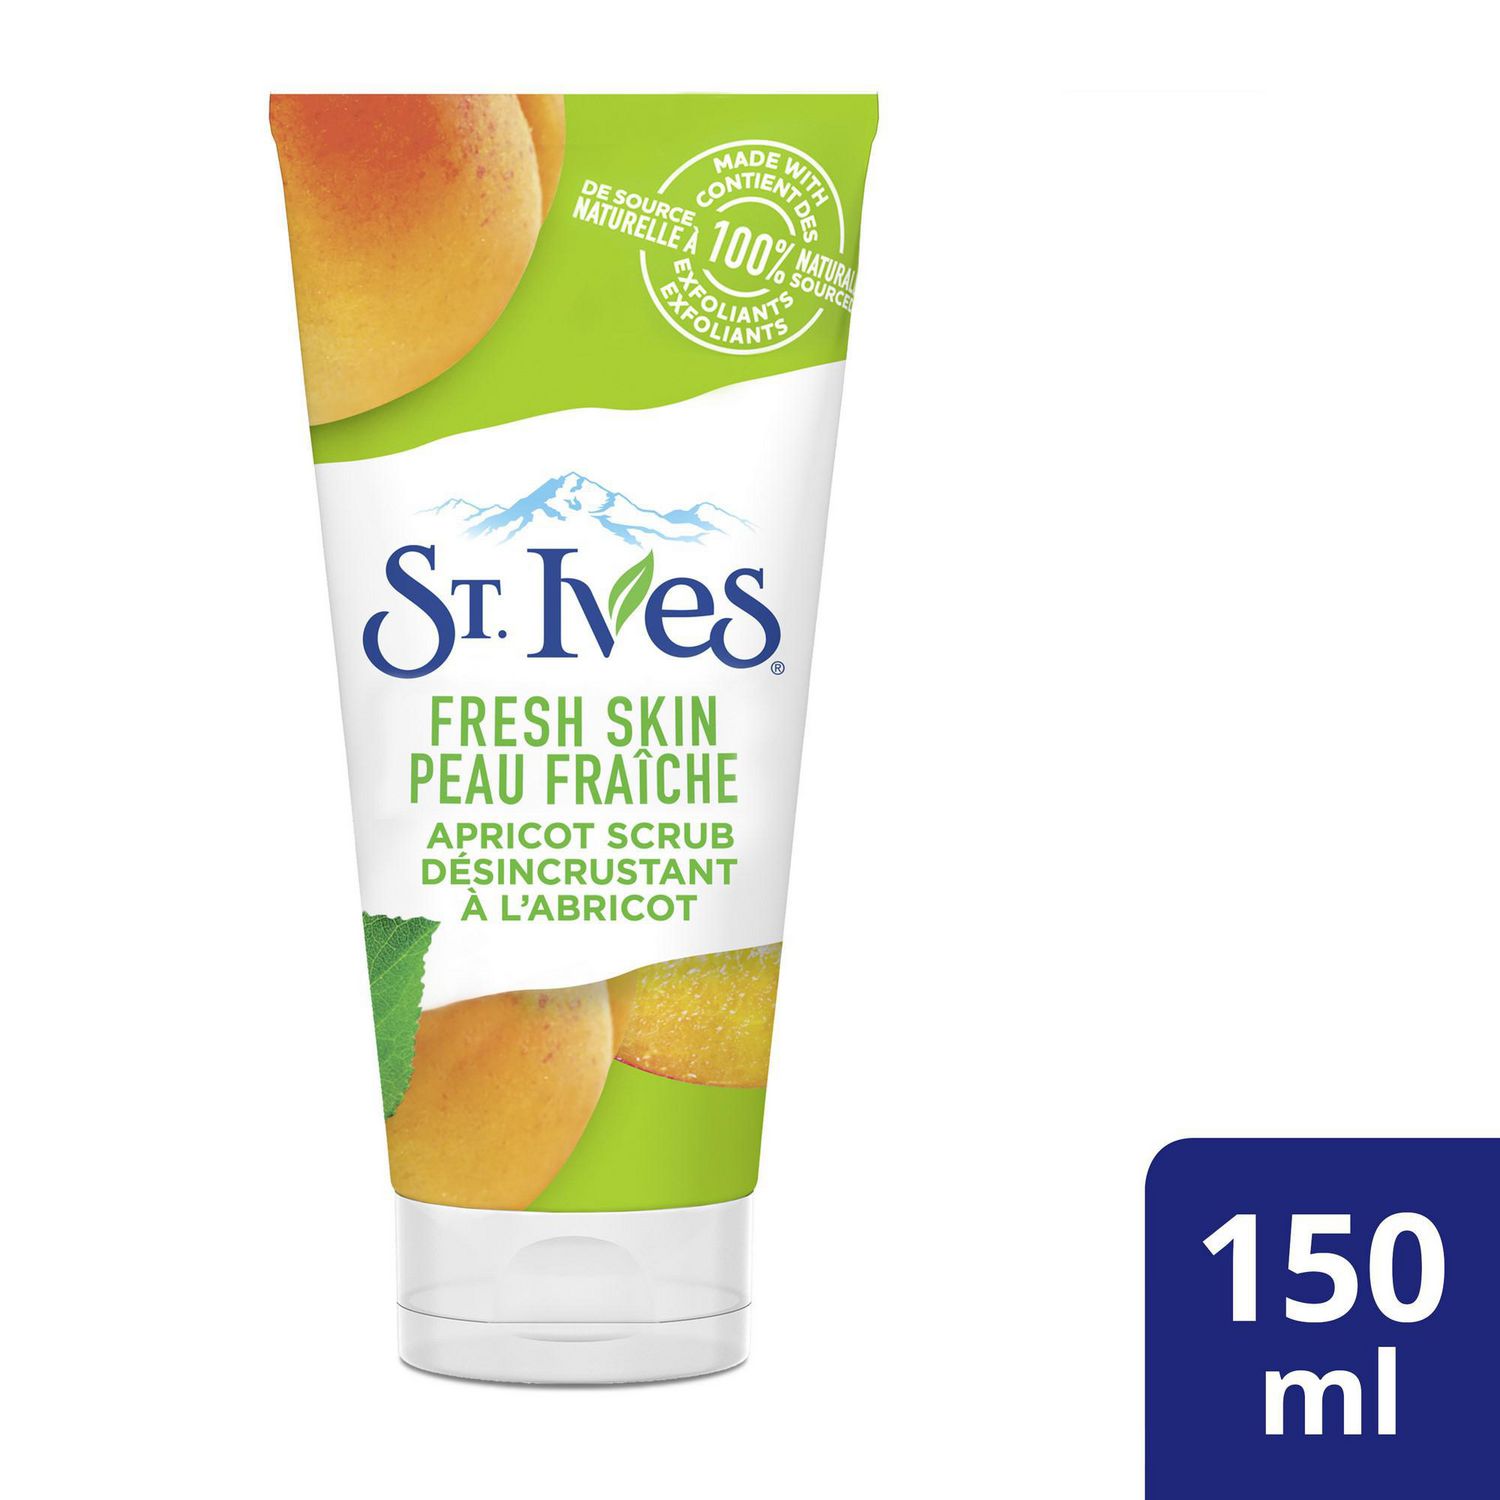 Скин скраб. Фреш скин. St. Ives Fresh Skin Apricot Scrub, 150 ml. St Ives. One Apricot.